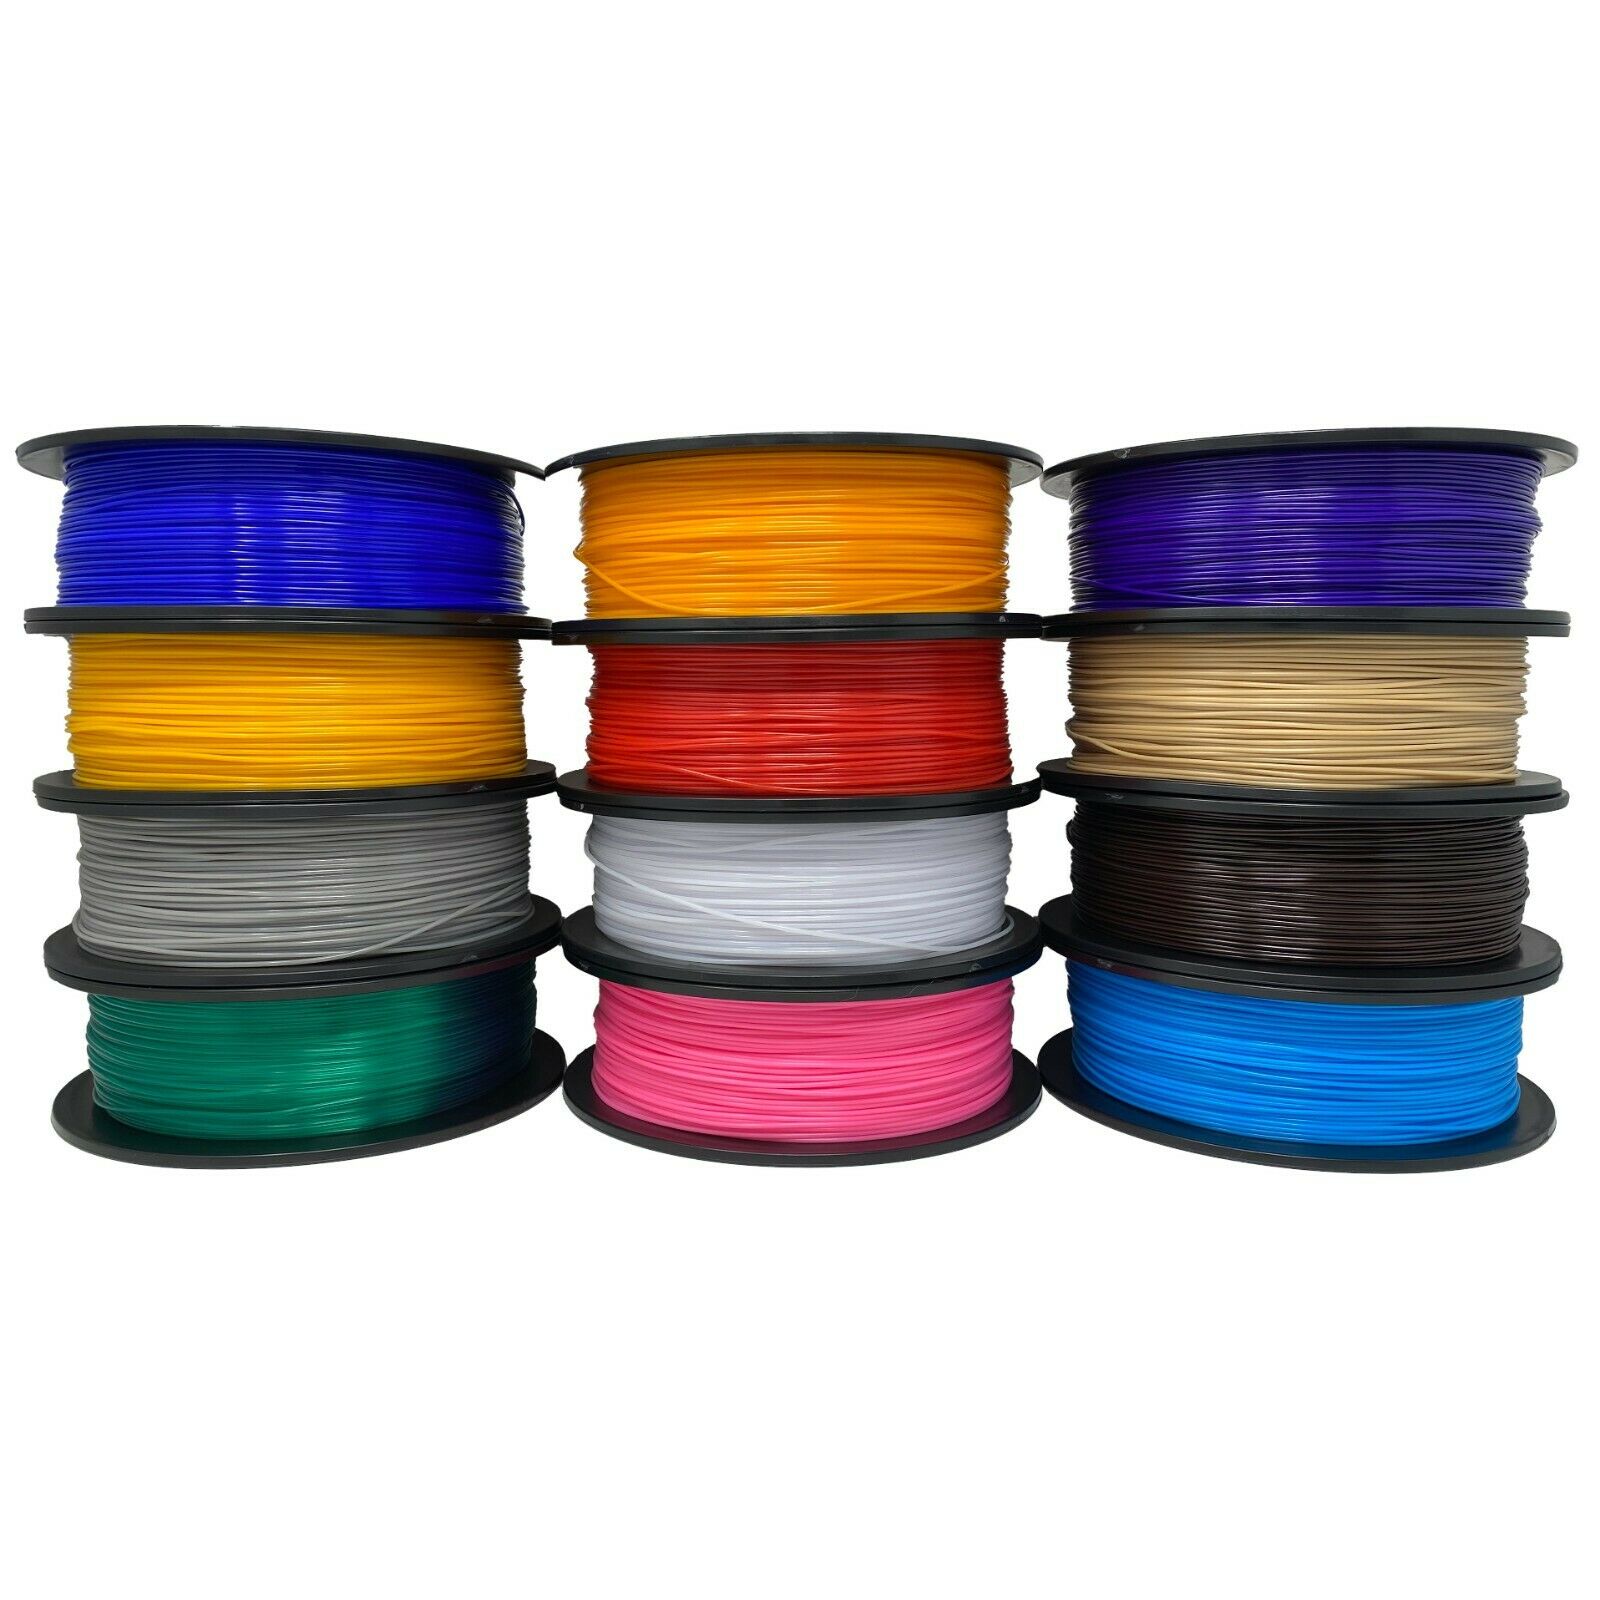 Petg Filament For 3d Printing - 30 Colors Available - 1.75mm - 1kg/2.2lb